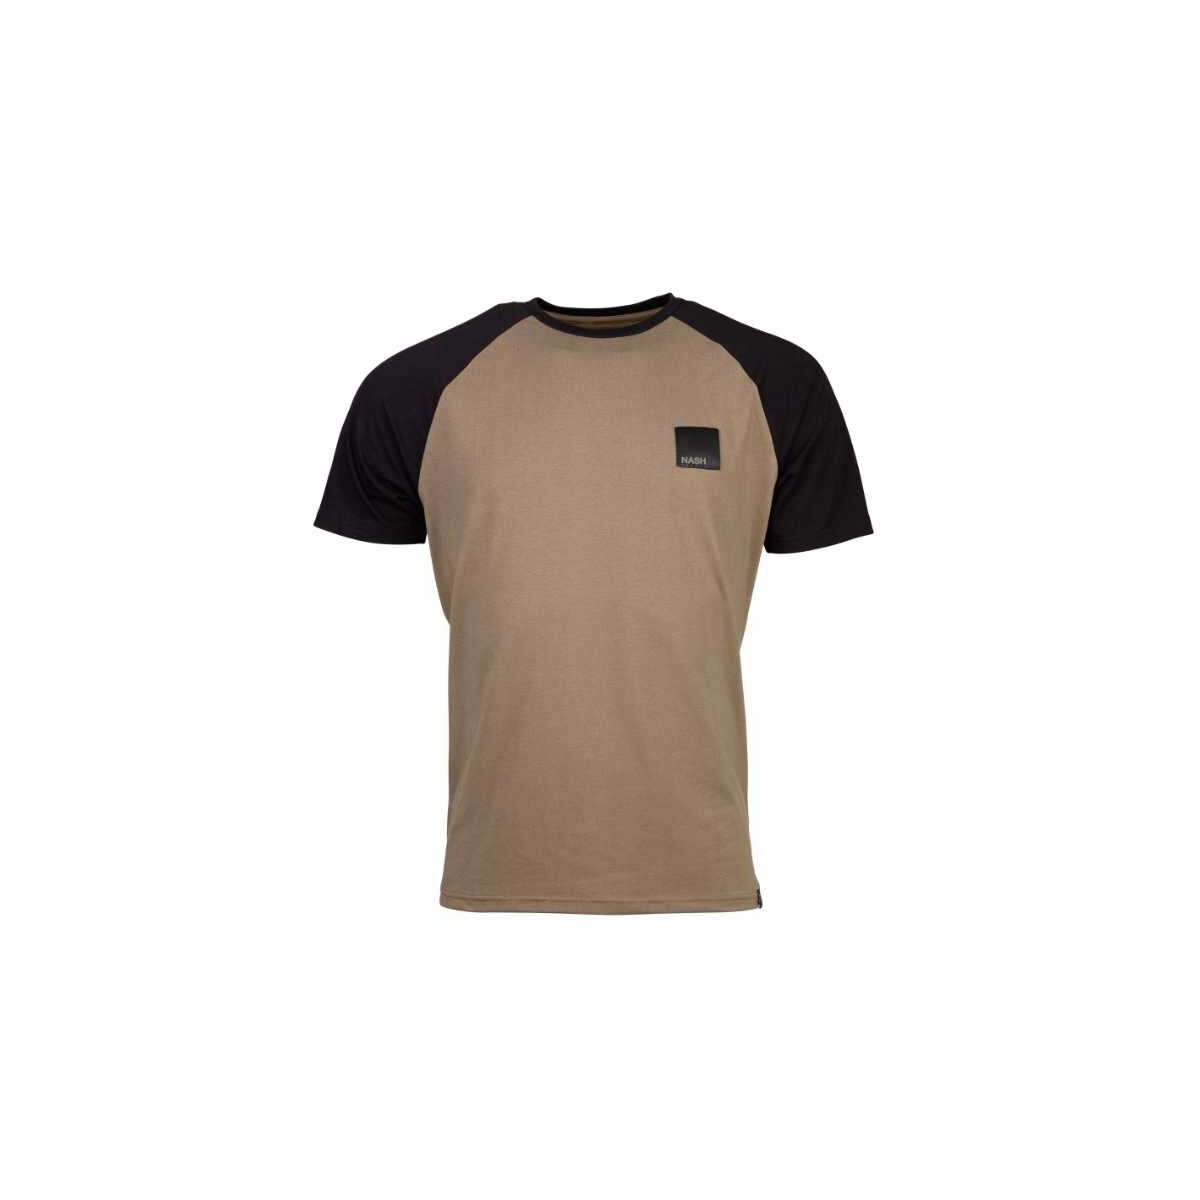 Nash Elasta-Breathe T-Shirt Black Sleeves